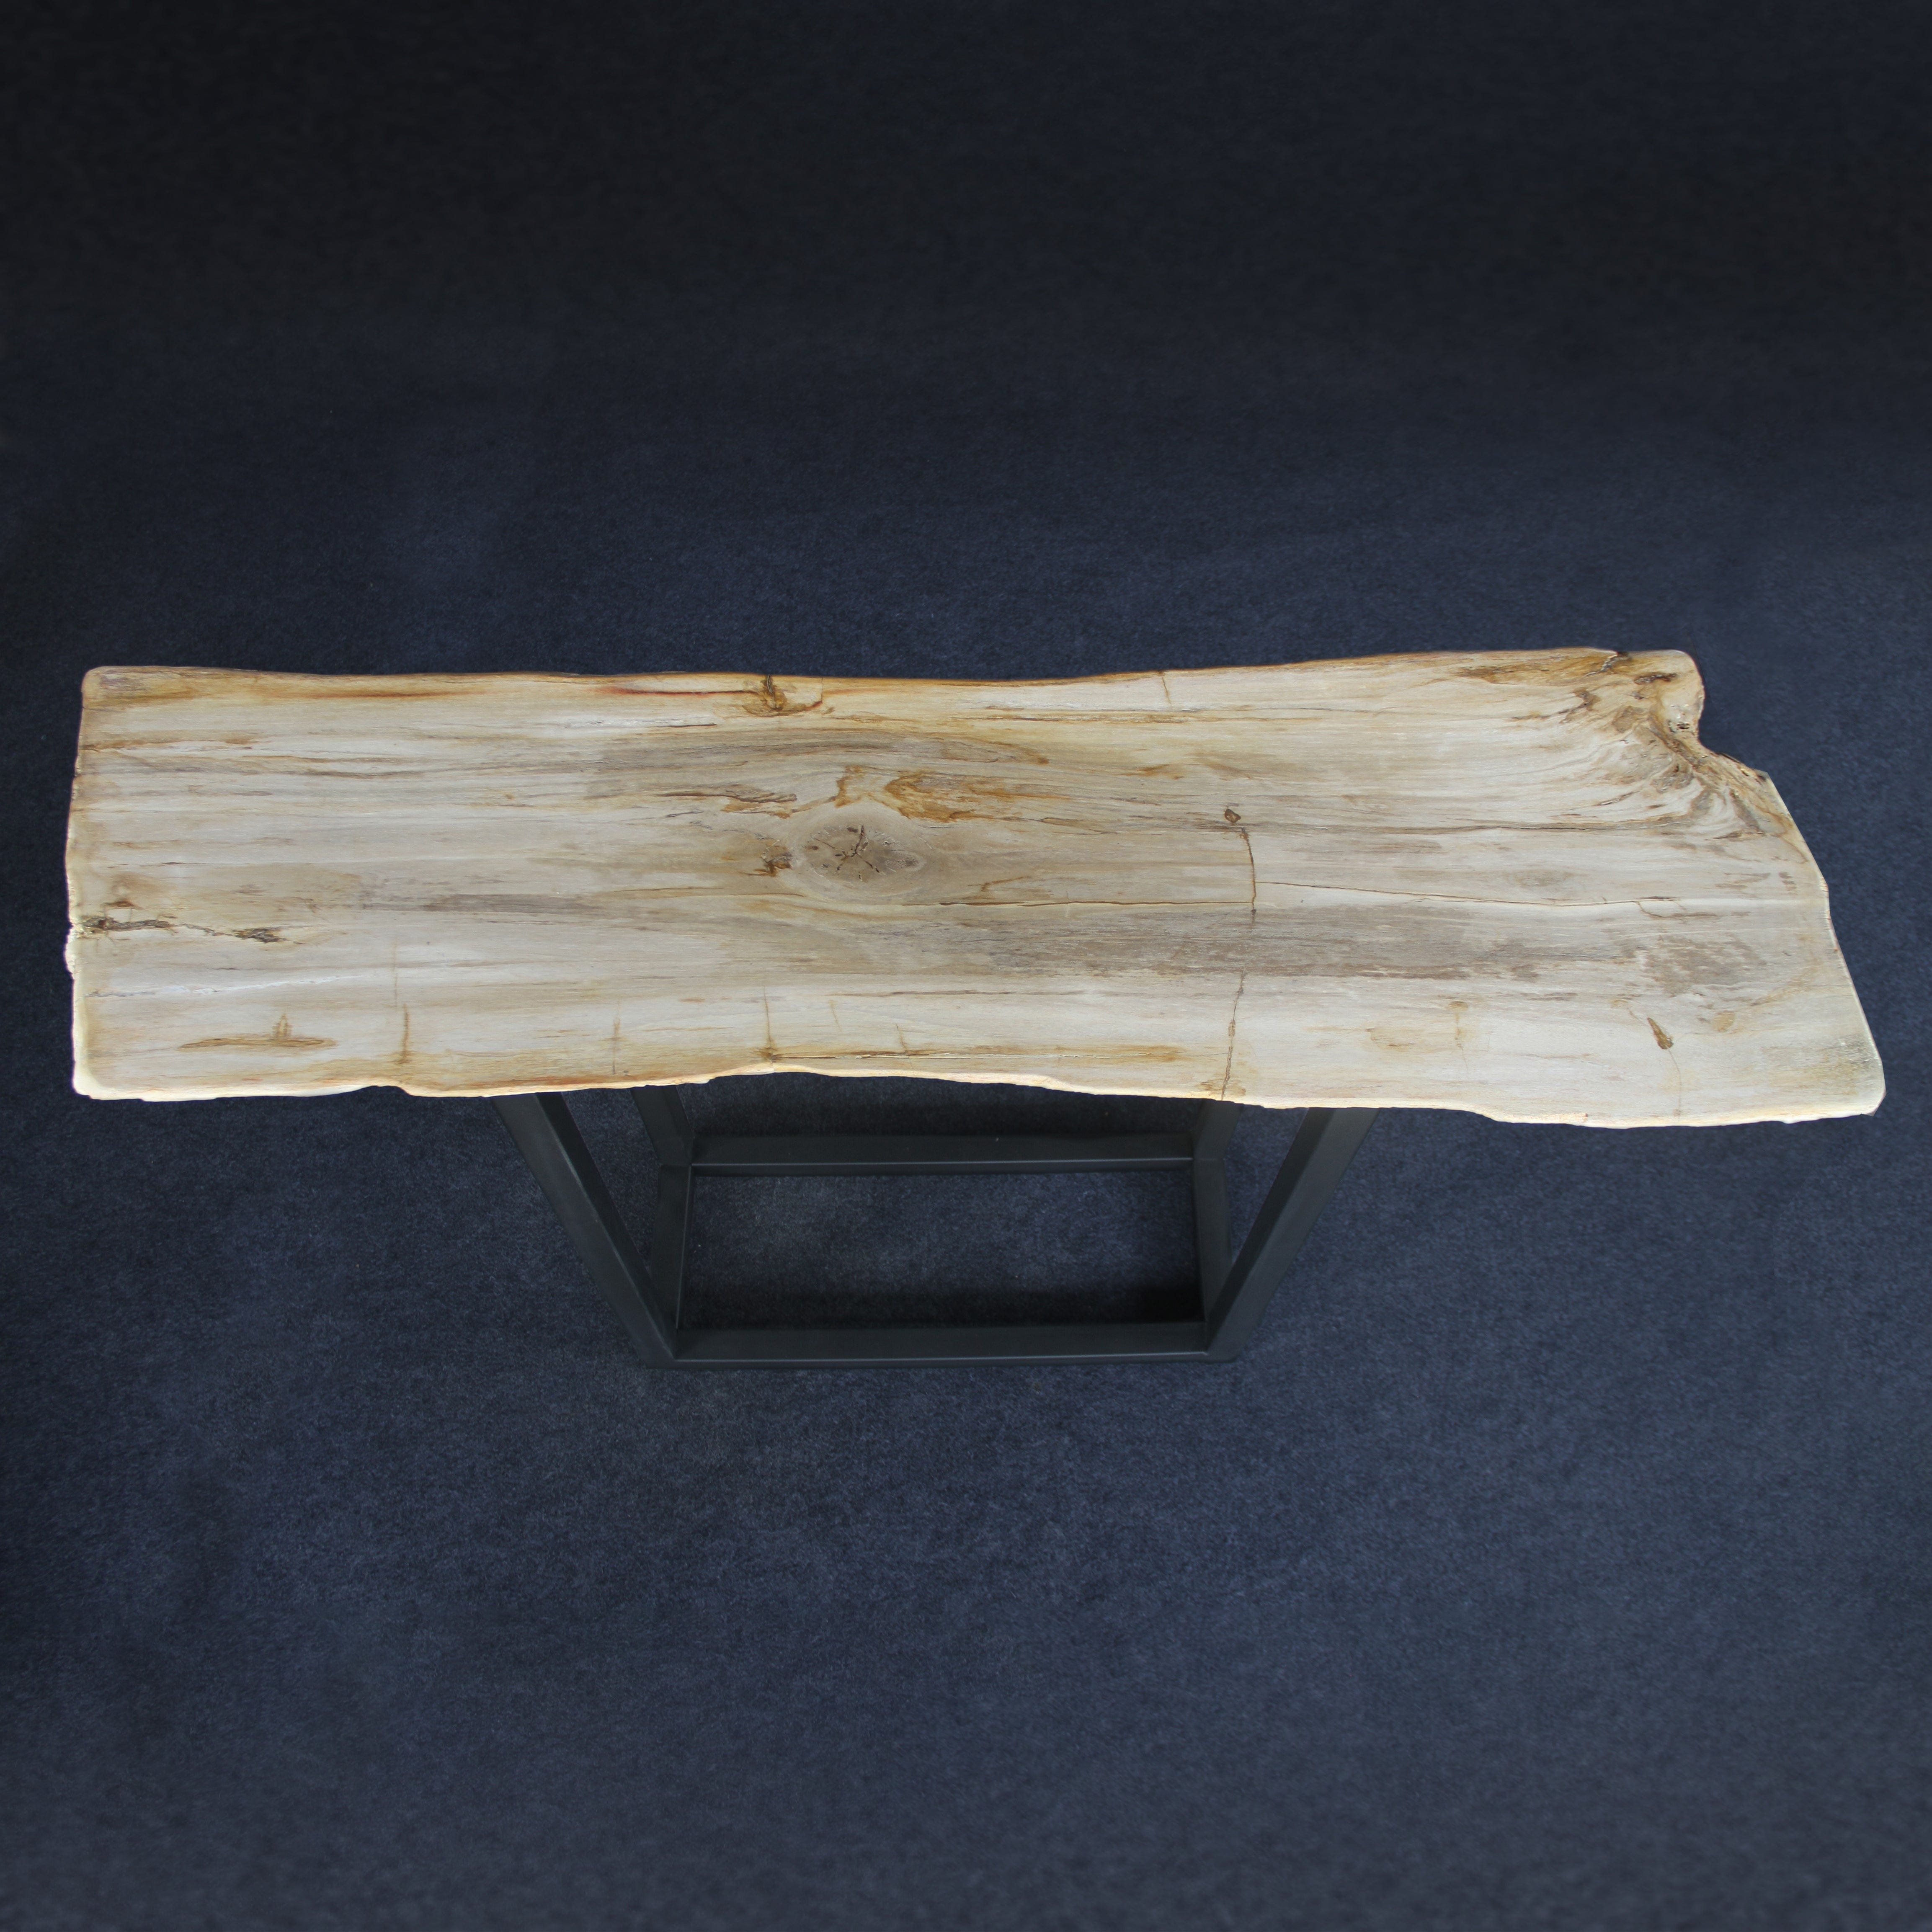 Kalifano Petrified Wood Petrified Wood Console Table 53" / 86 lbs PWR4400.007